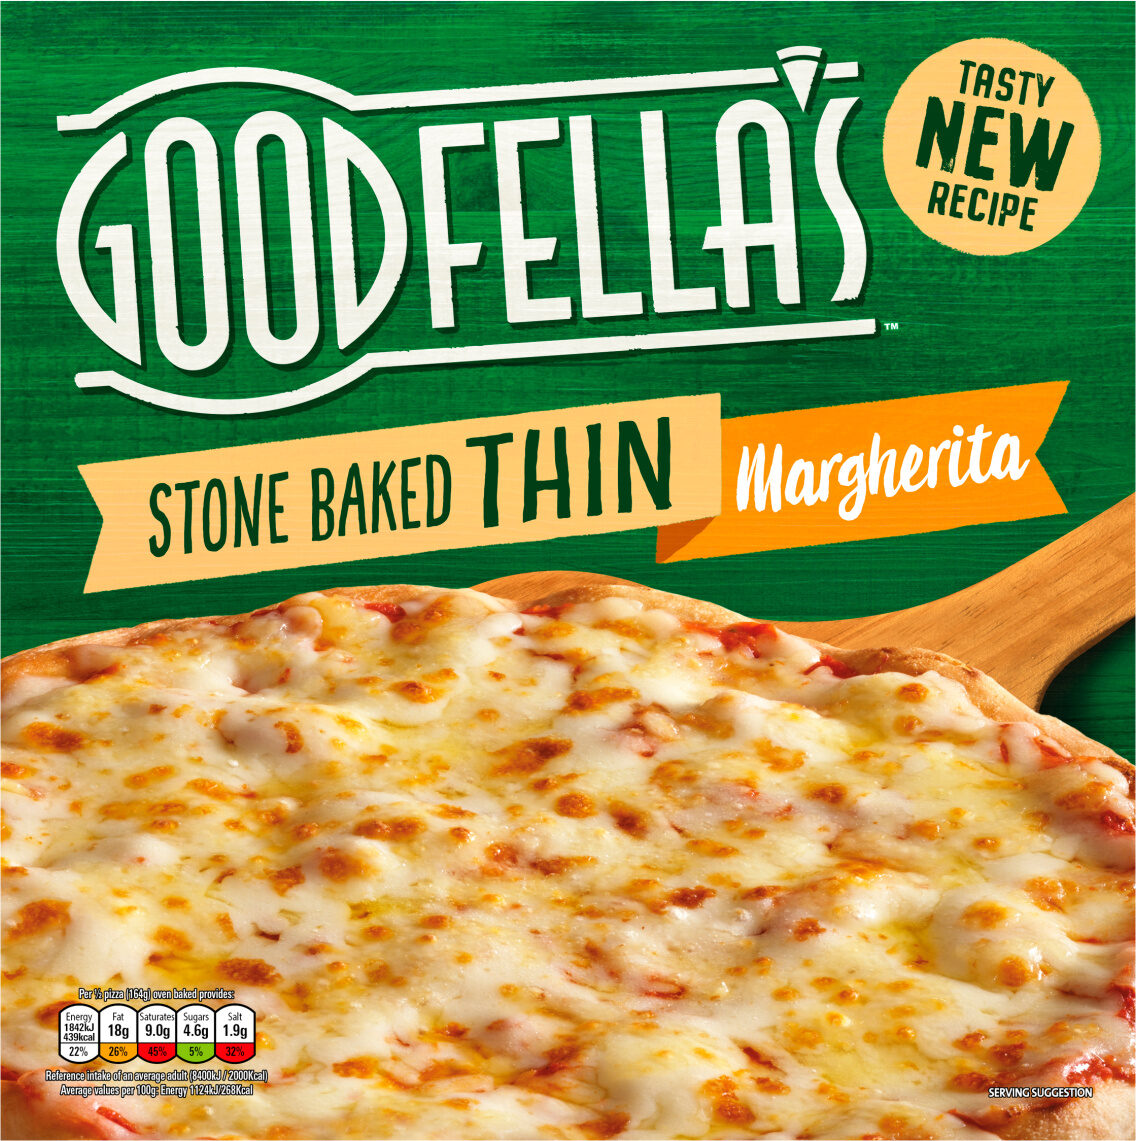 Goodfellas Thin Pizza Margherita 345g - Product